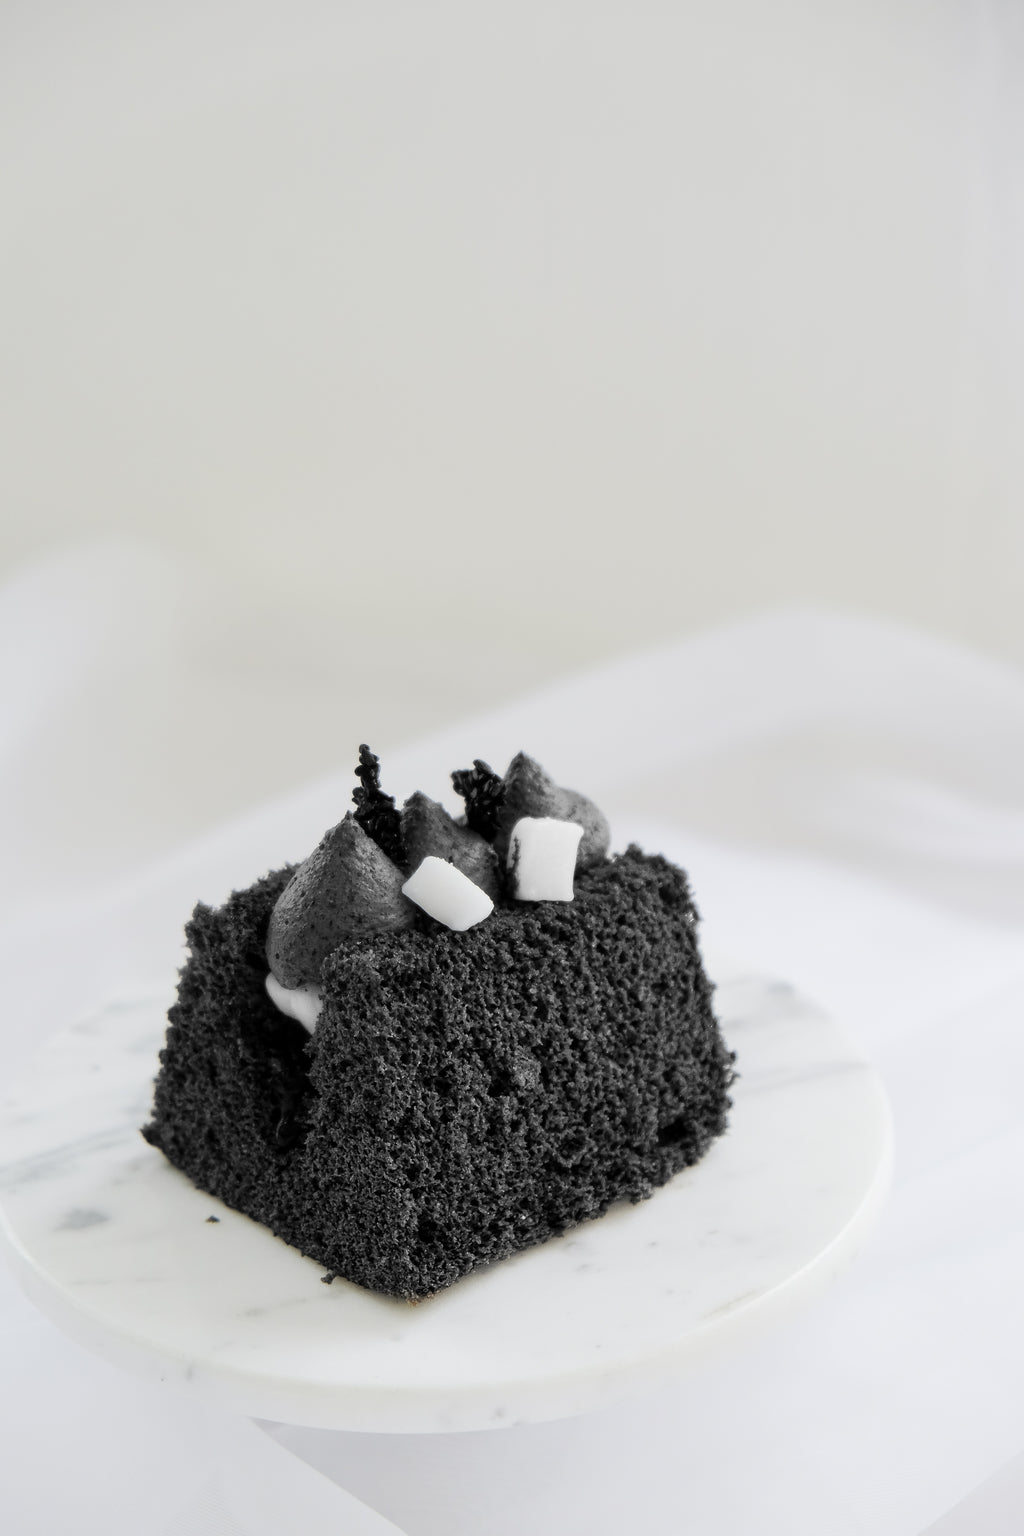 Black Sesame & Coconut Milk Cake Recipe by Hiroko Liston - Cookpad